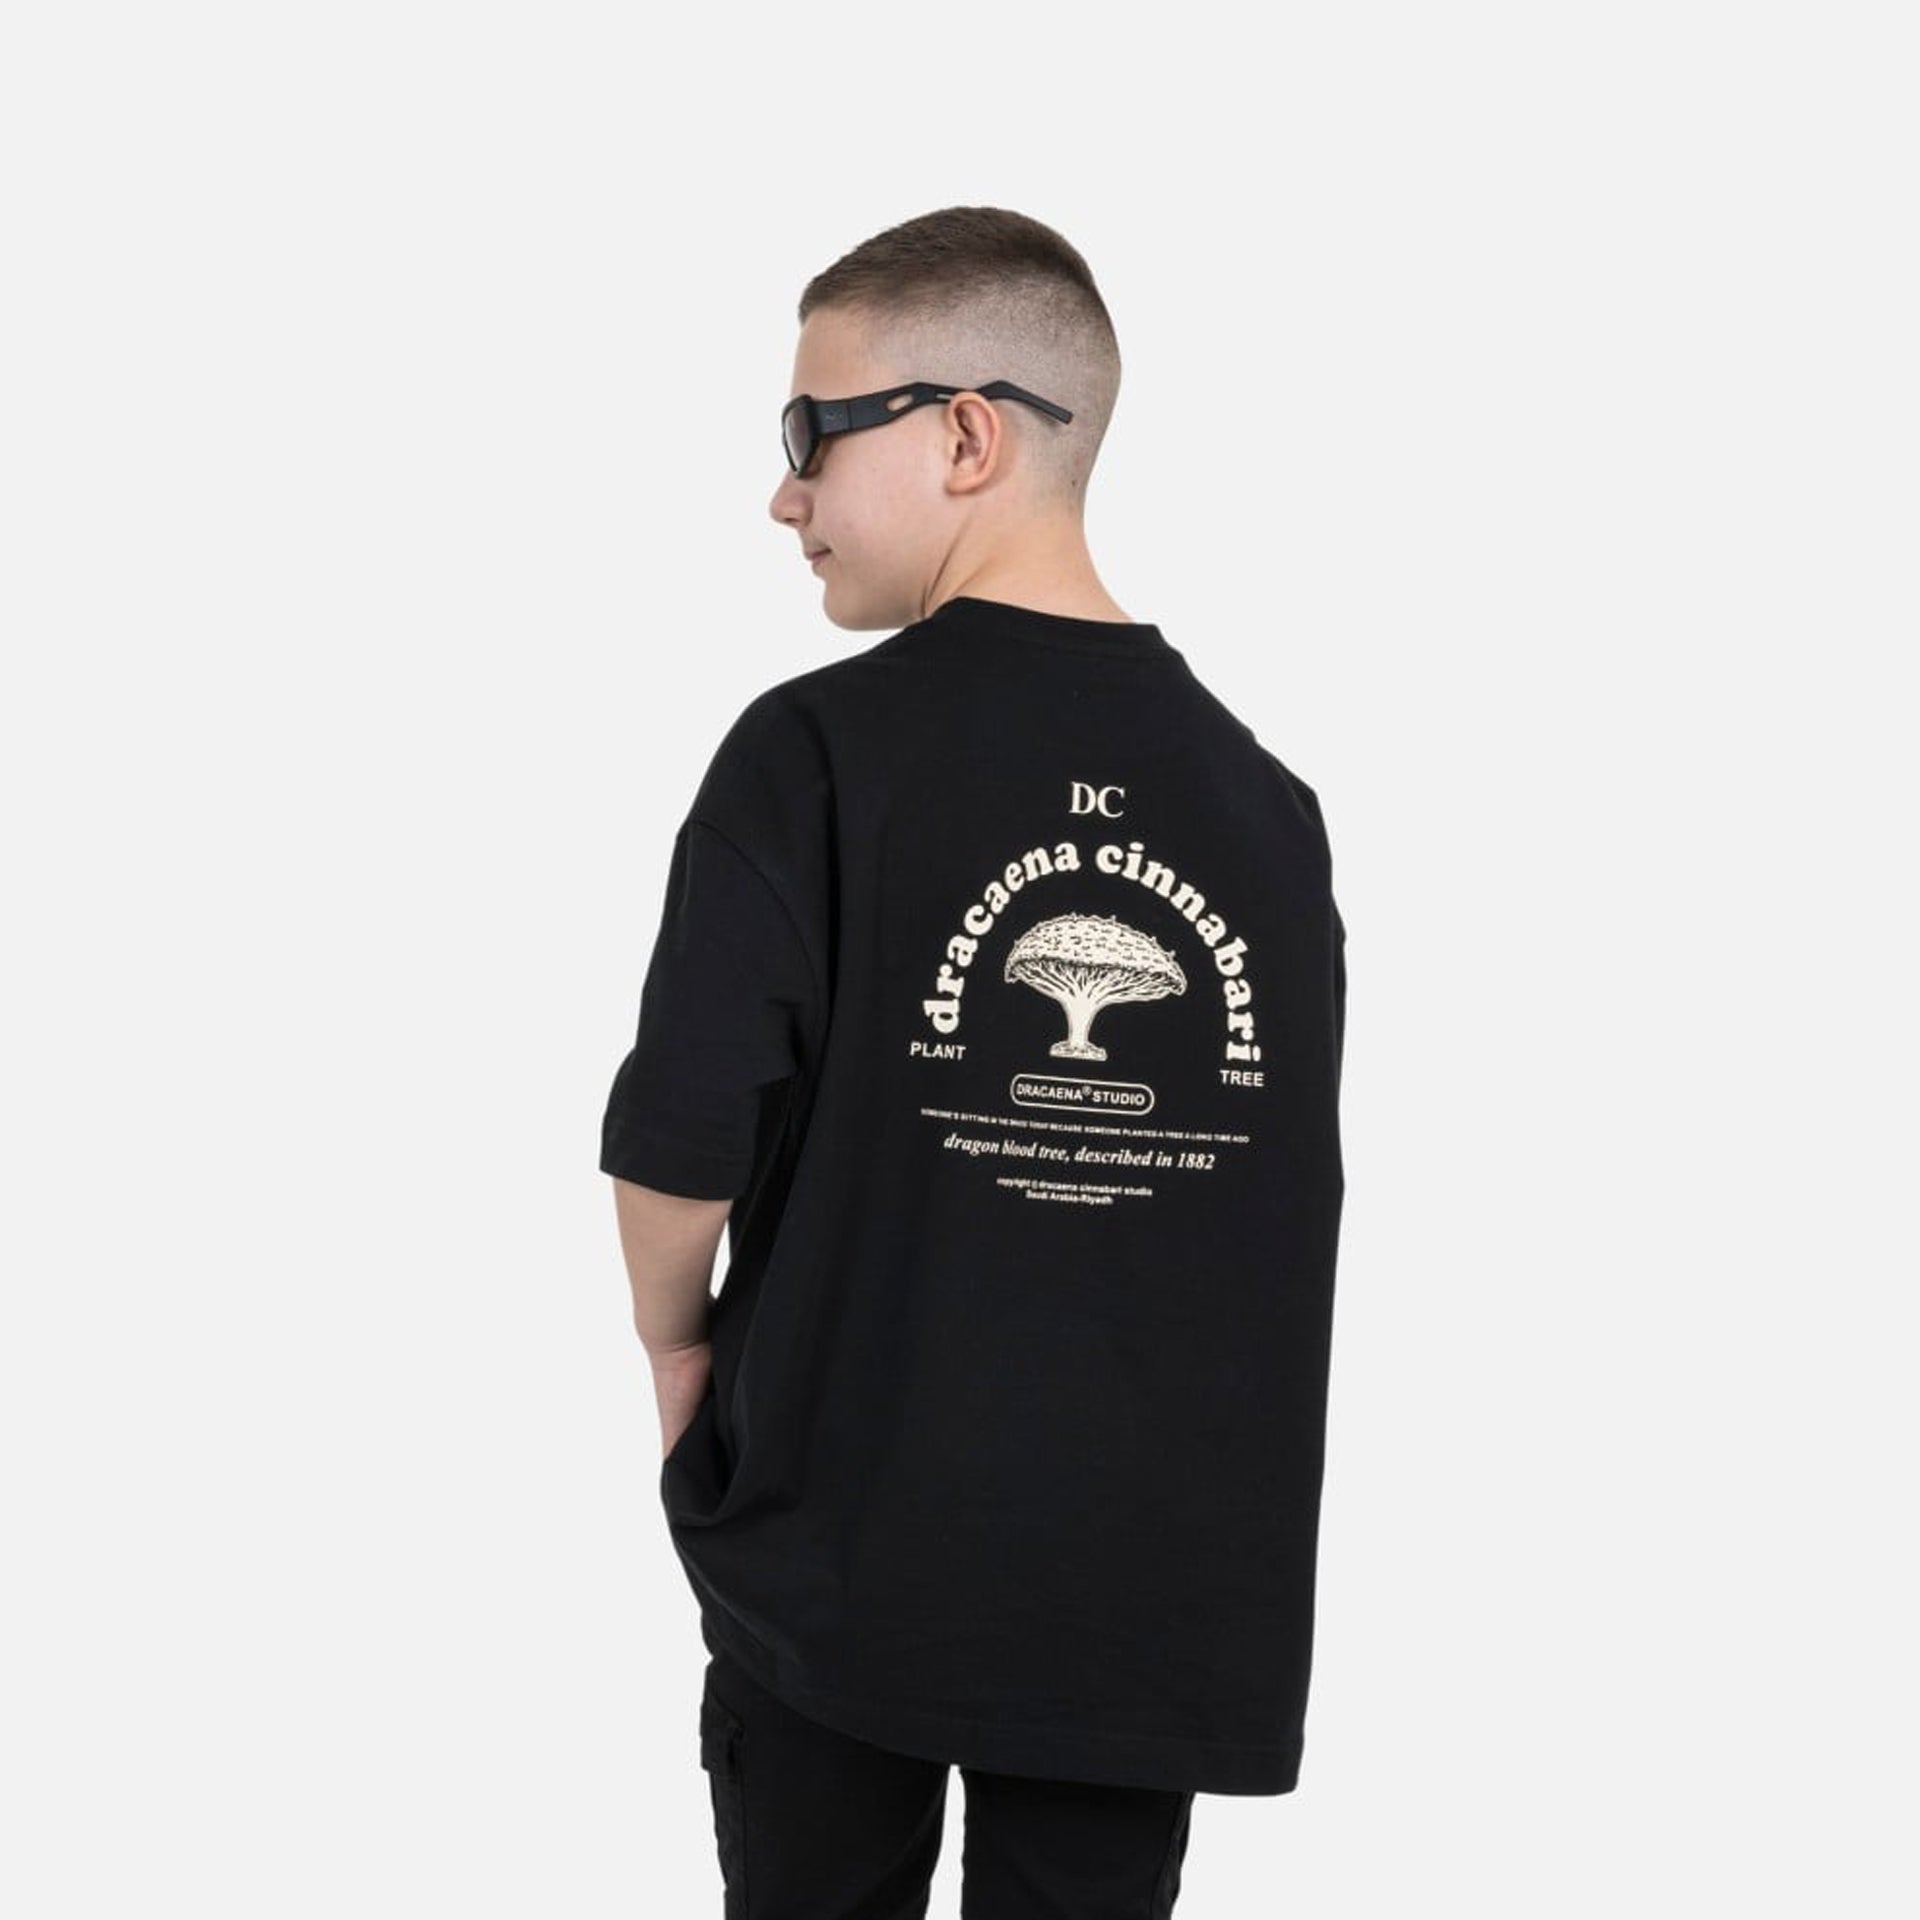 Kids Black Cotton T-shirt With Prints By Dracaena Cinnabari